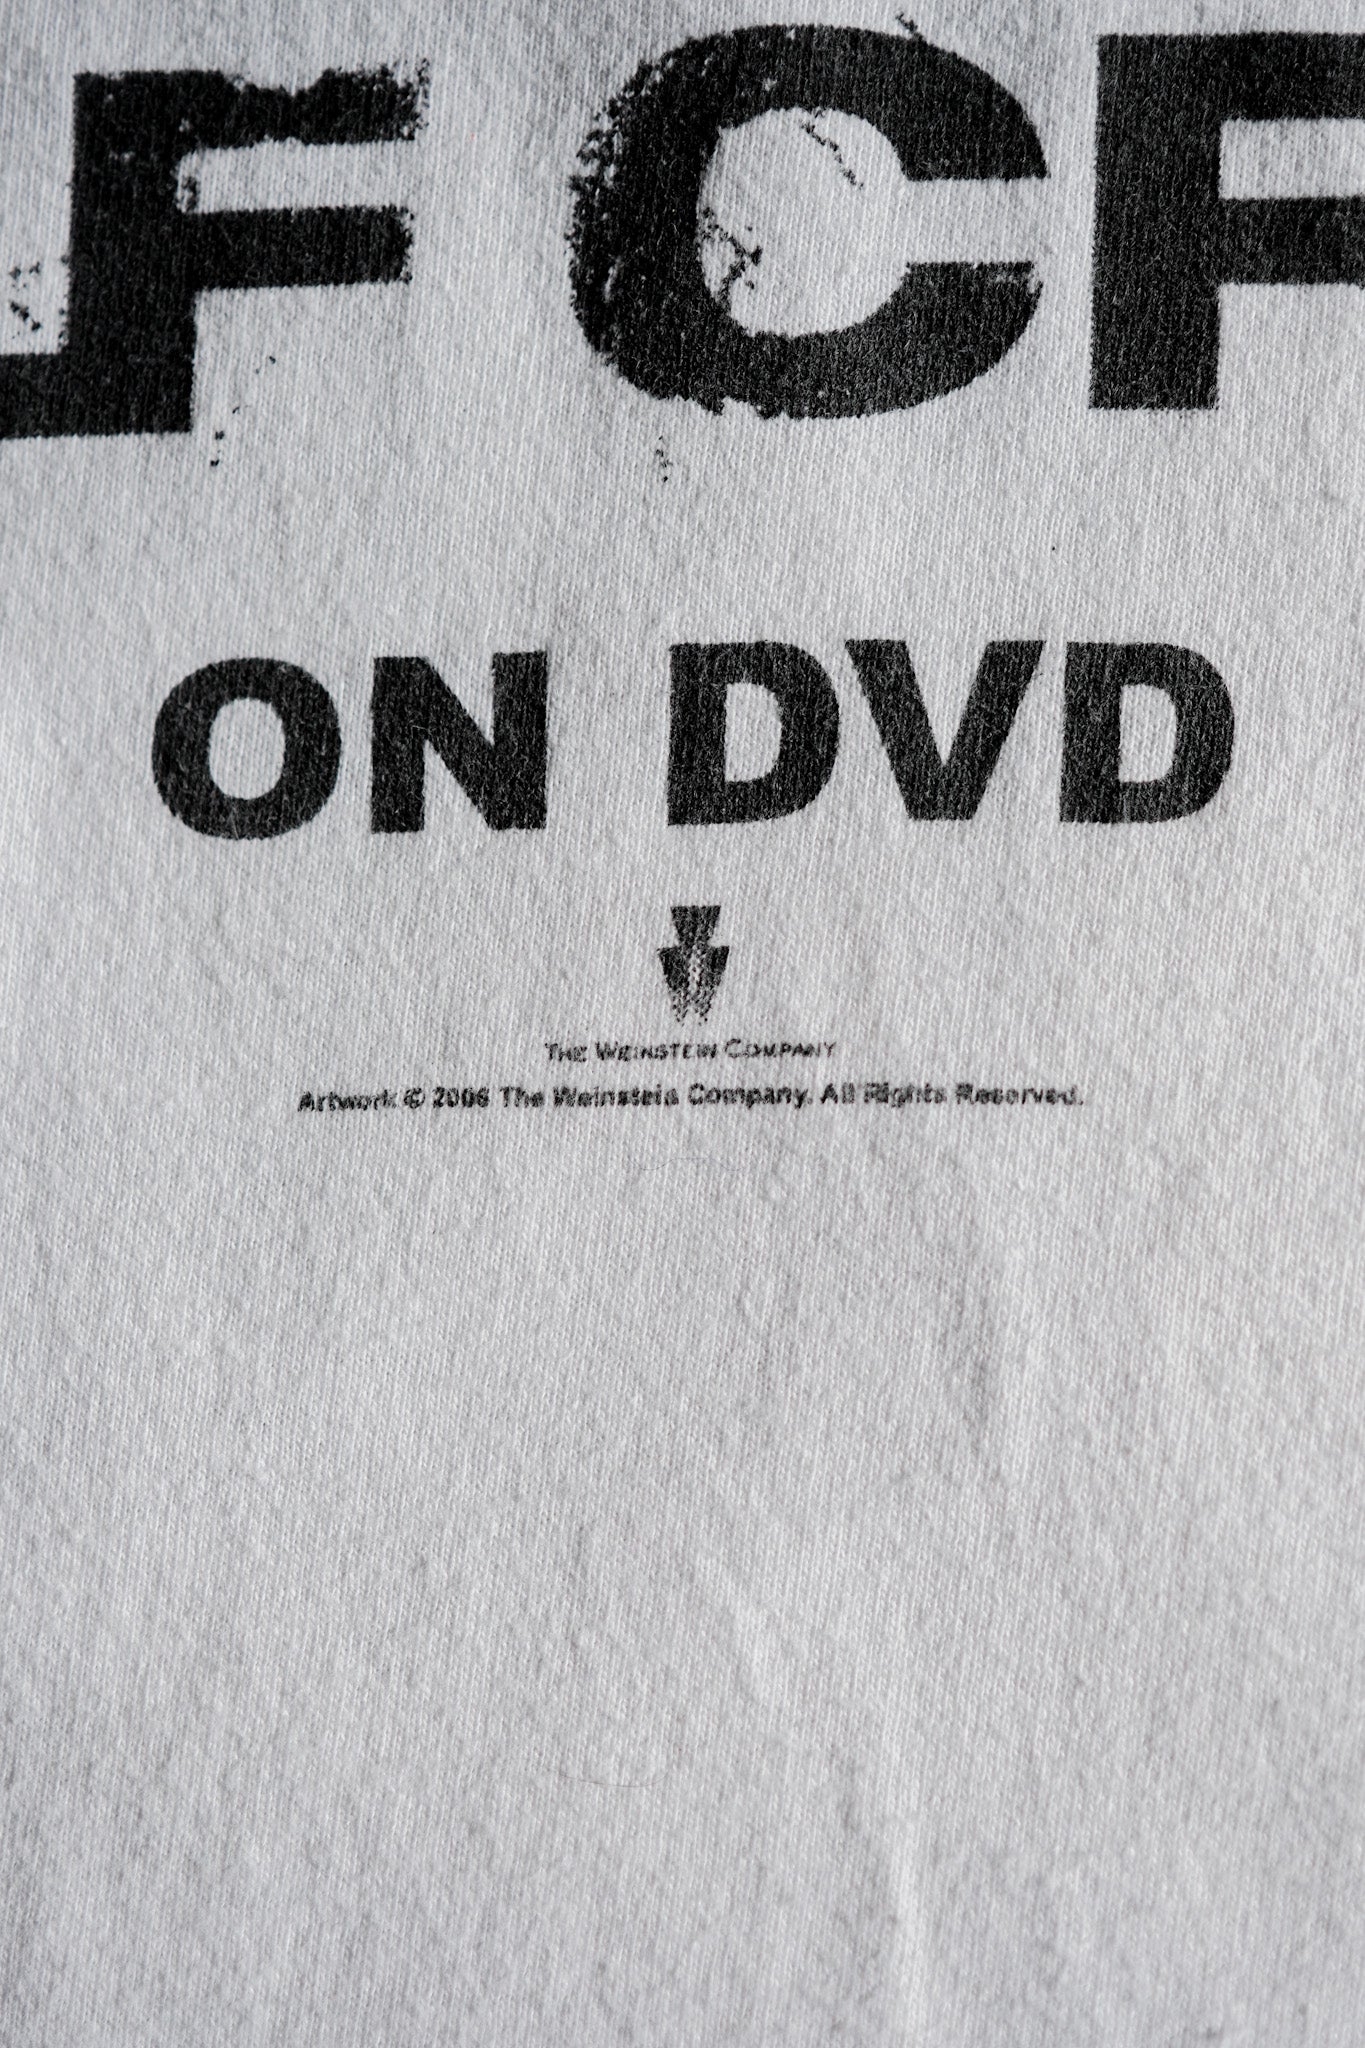 【~00's】Vintage Movie Print T-shirt Size.L "WOLF CREEK"